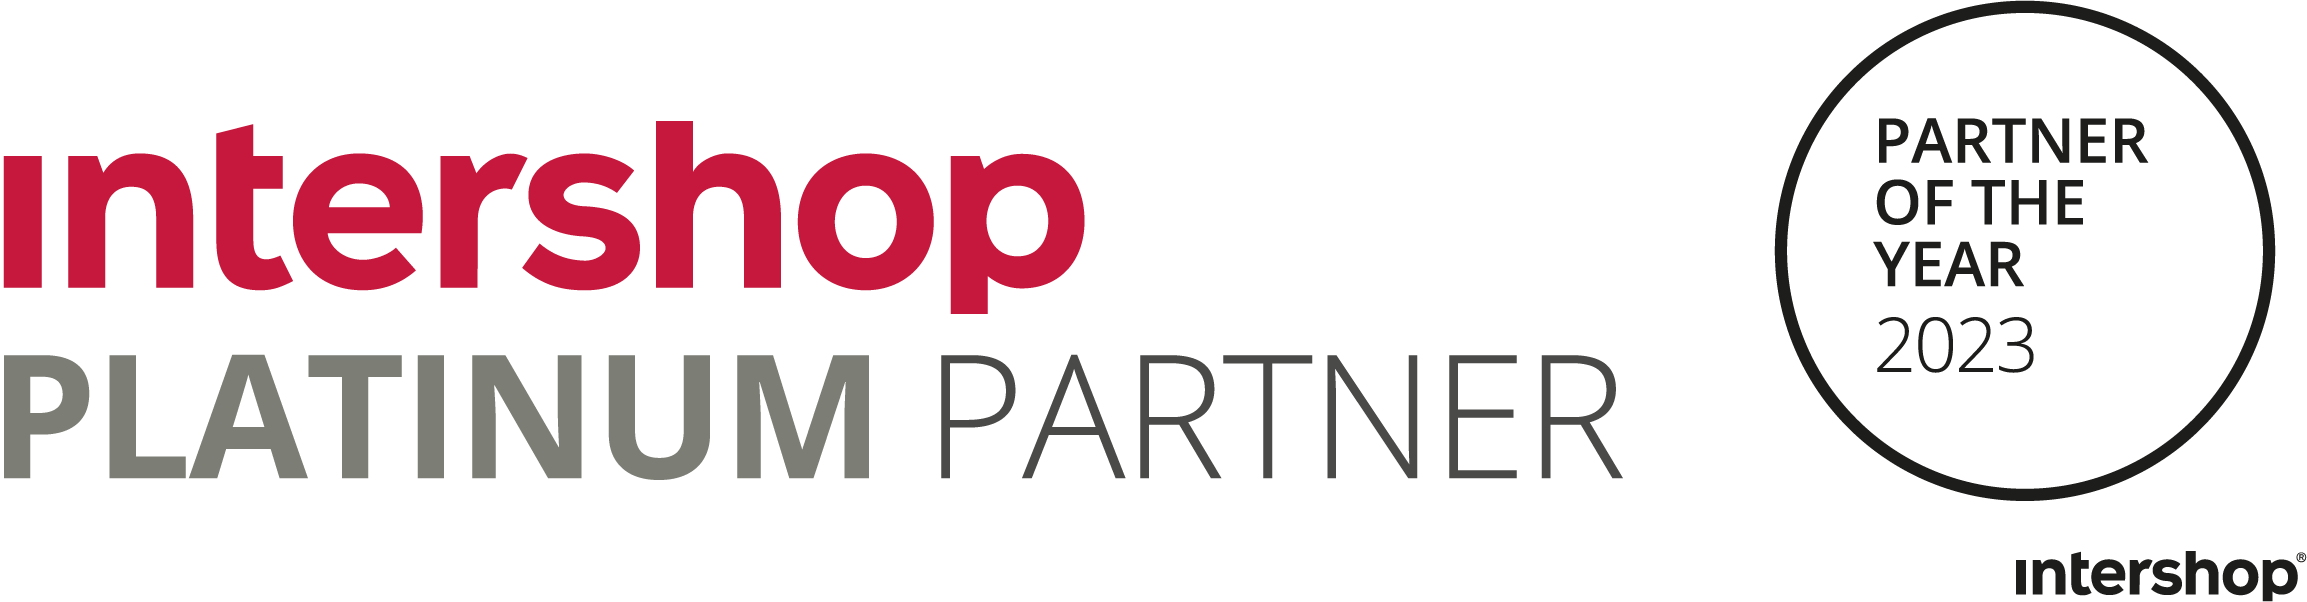 intershop platinum partner & partner of the year 2023.png